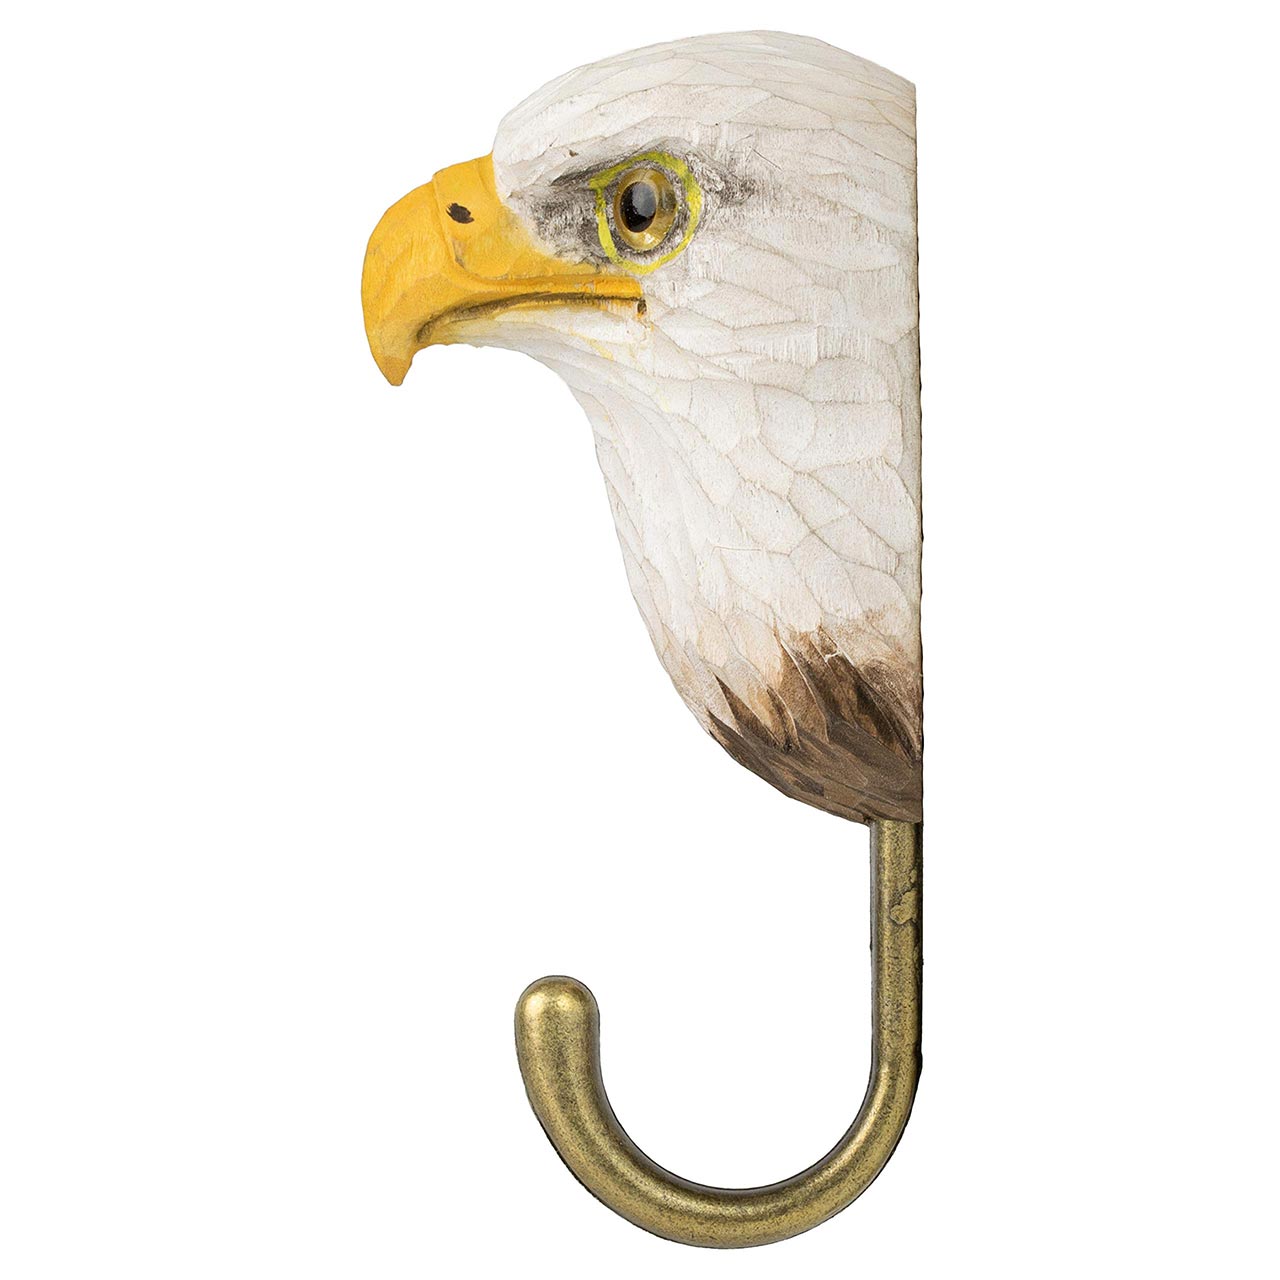 WILDLIFE GARDEN Wall Hook American Animals | Bald Eagle